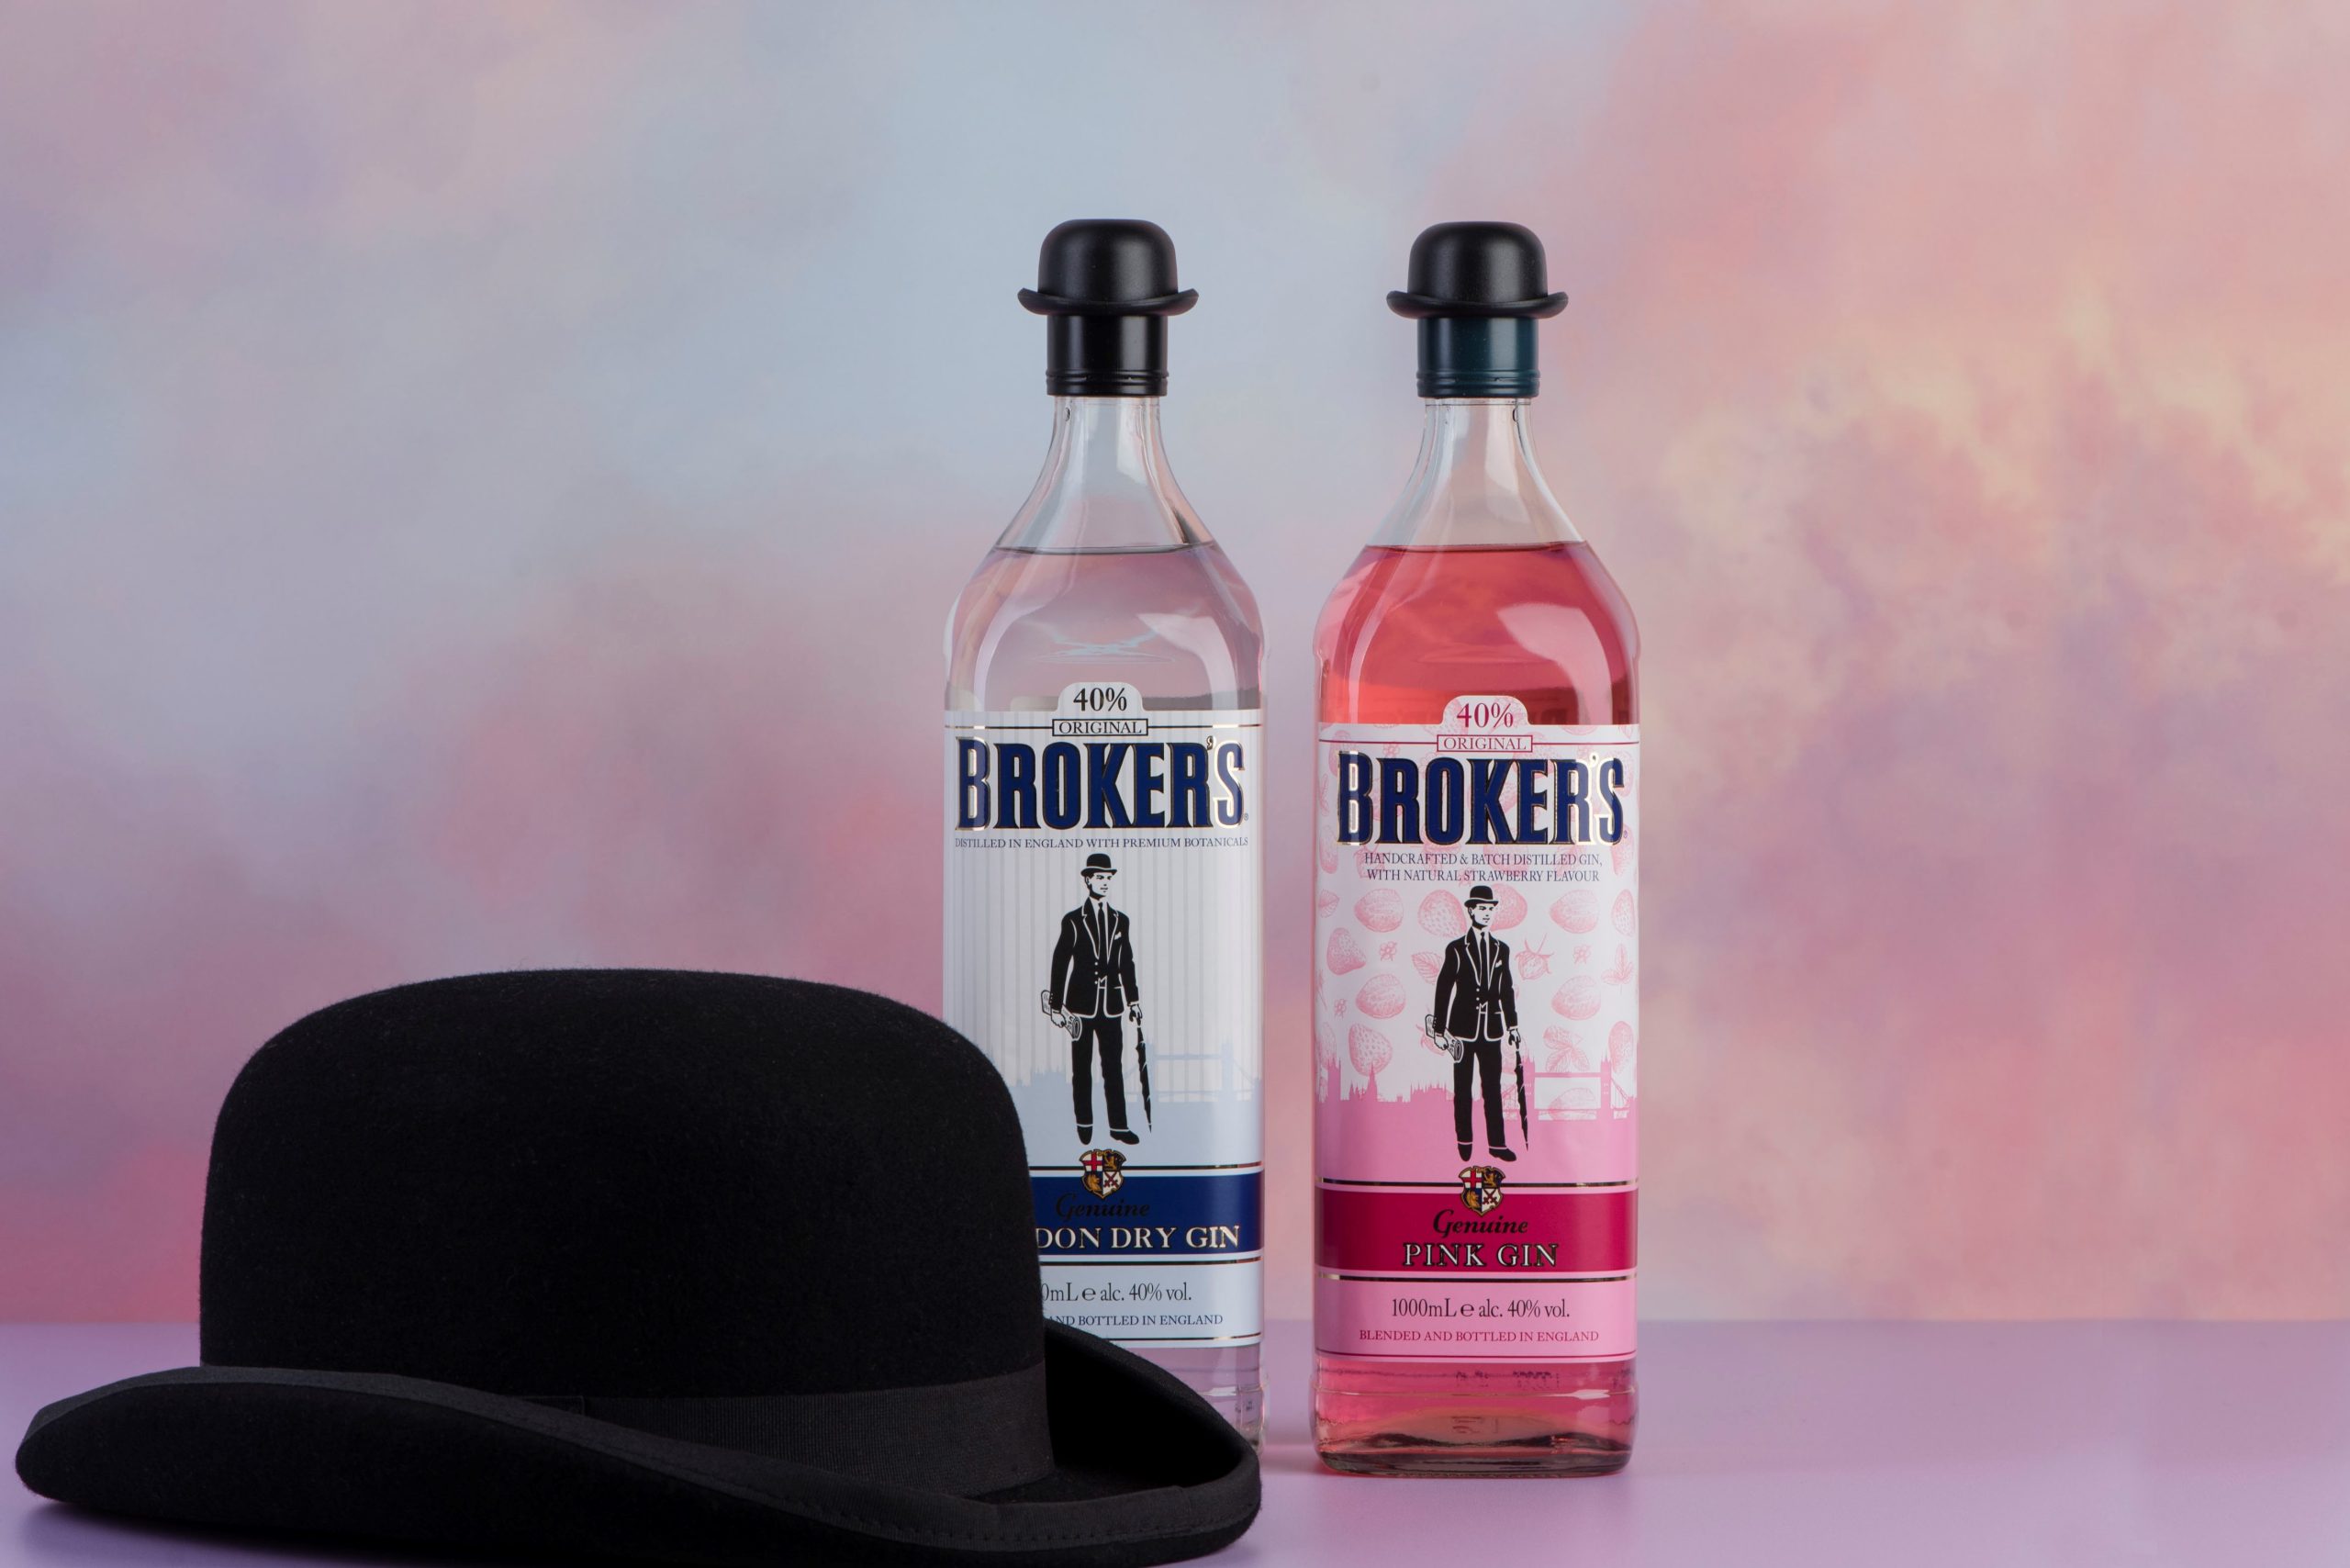 Broker's Gin bottles and bowler hat